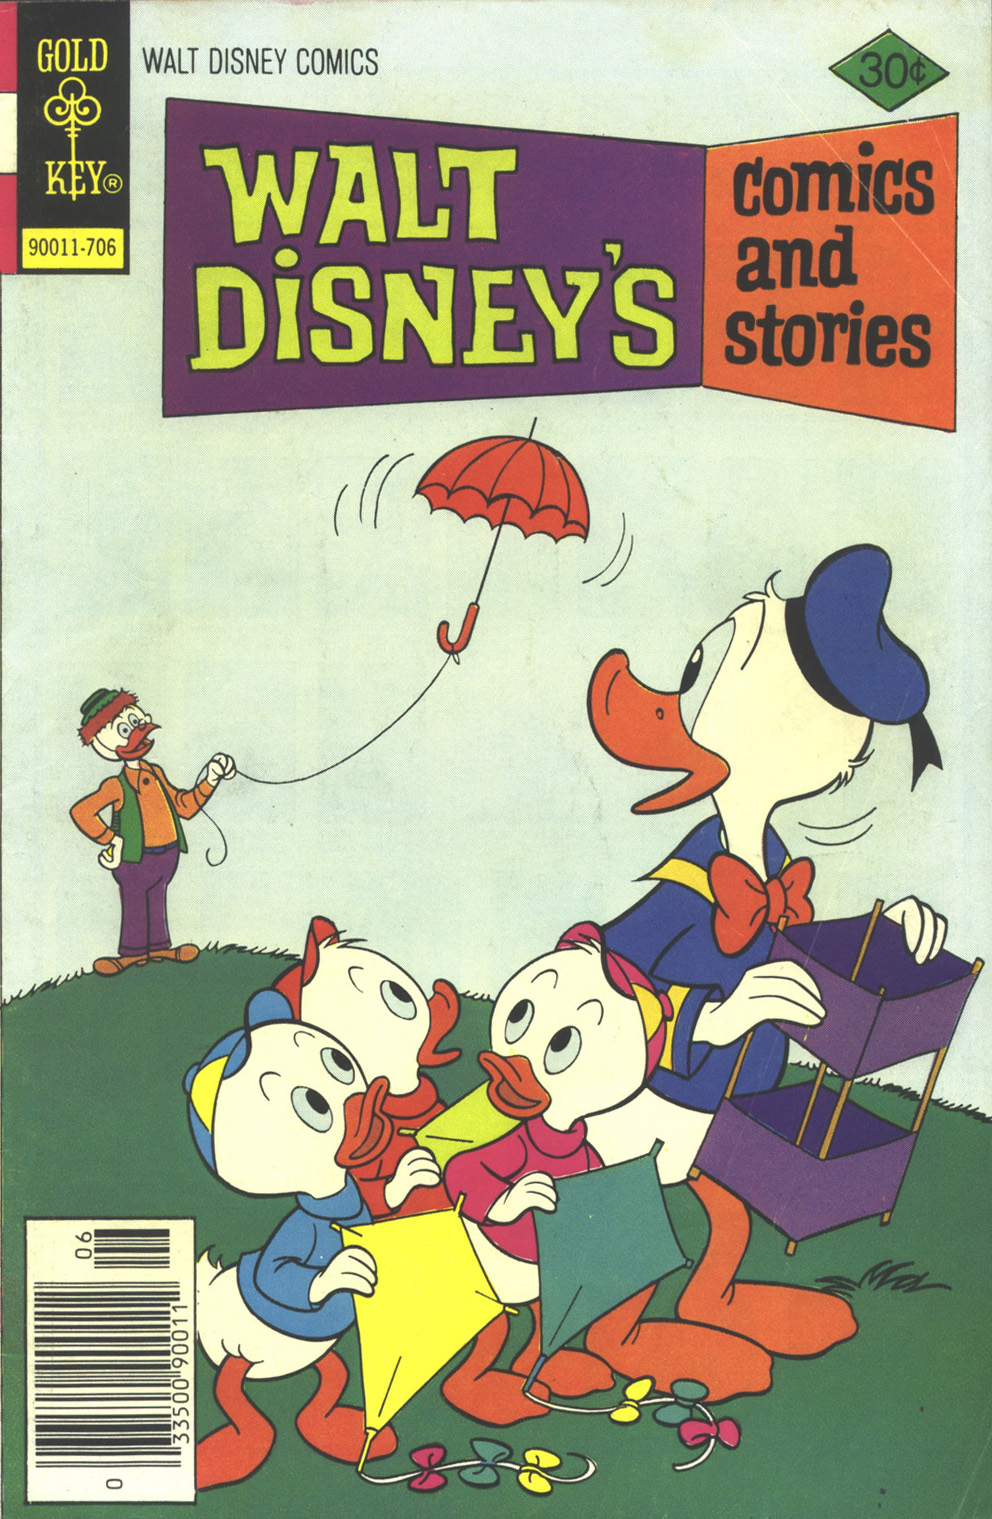 Walt Disneys Comics and Stories 441 Page 1